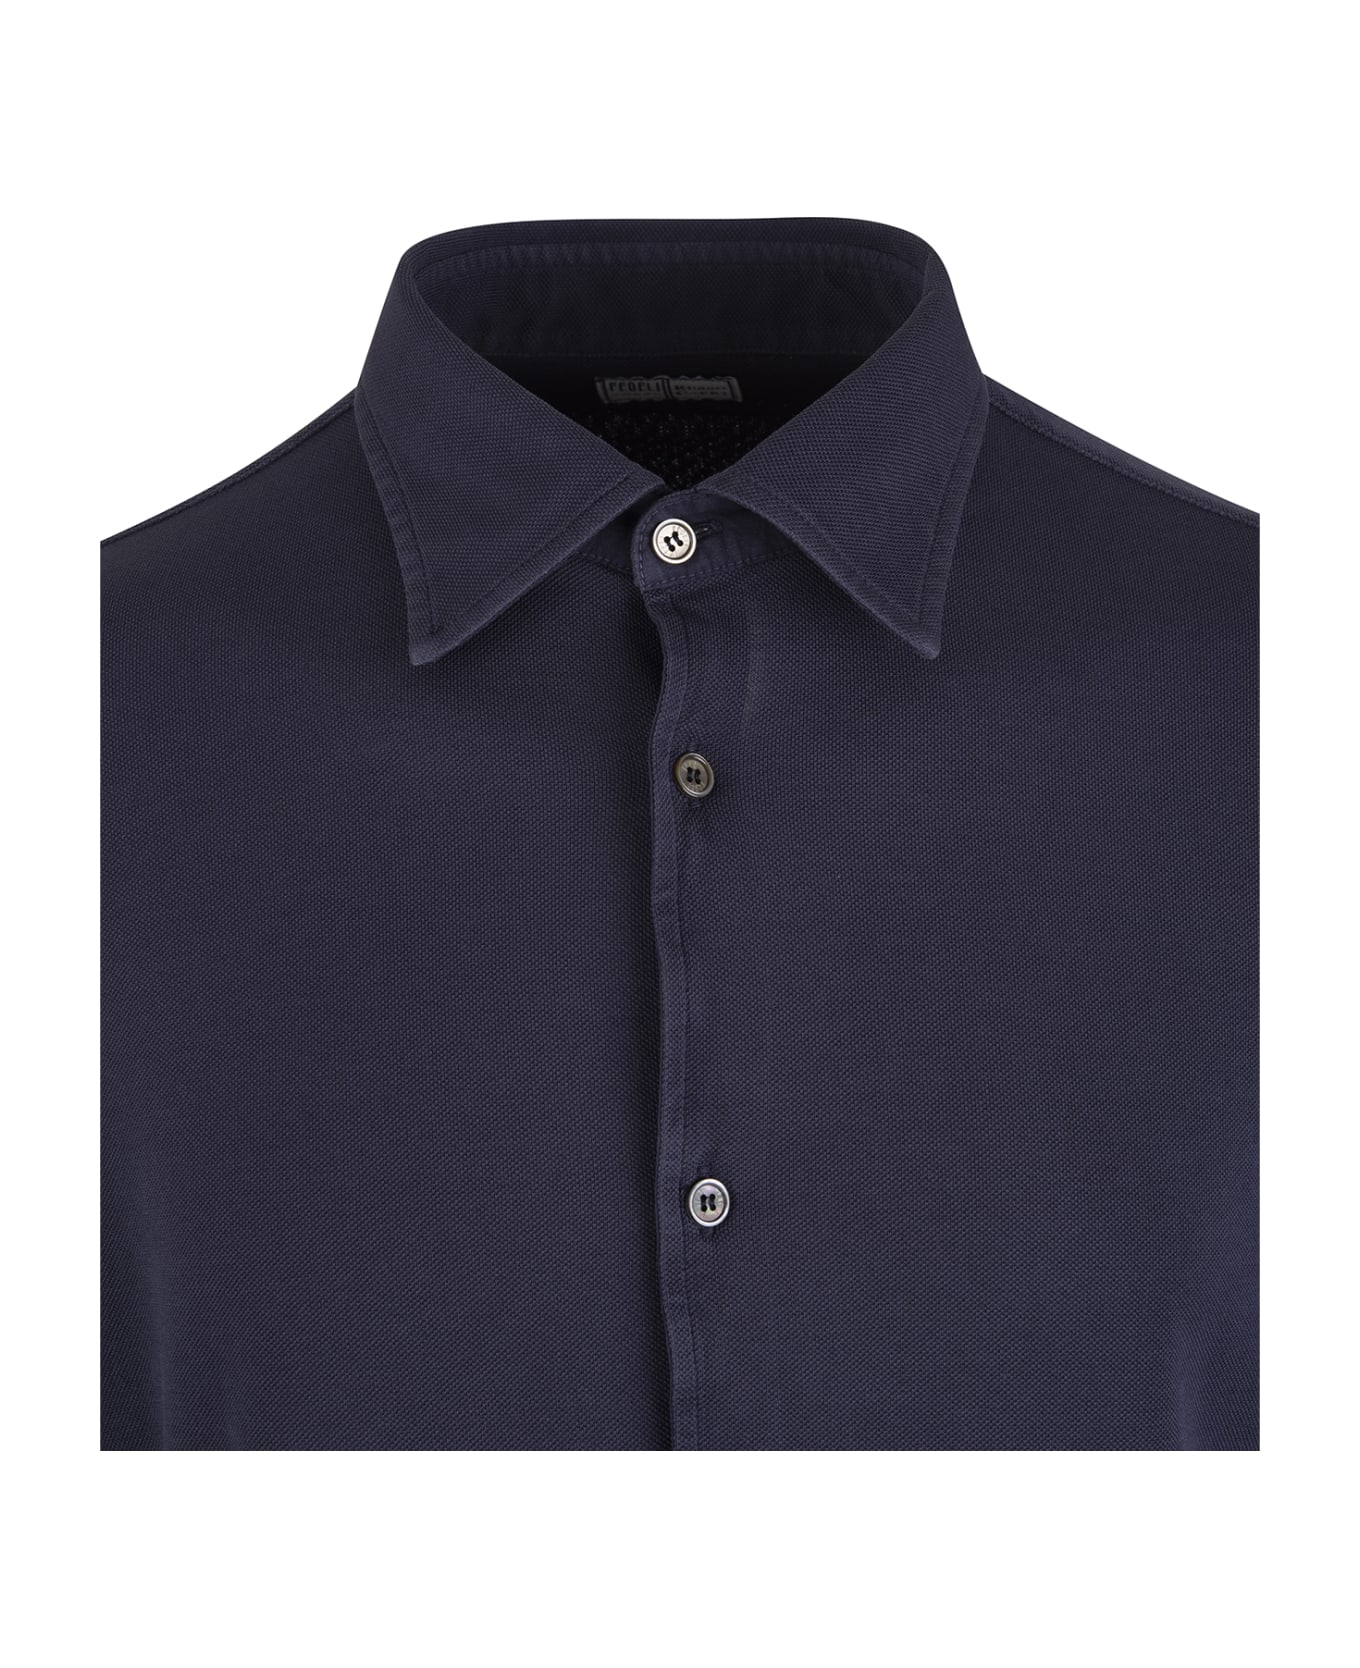 Fedeli Teorema Shirt In Navy Blue Cotton Piqué - Blue シャツ